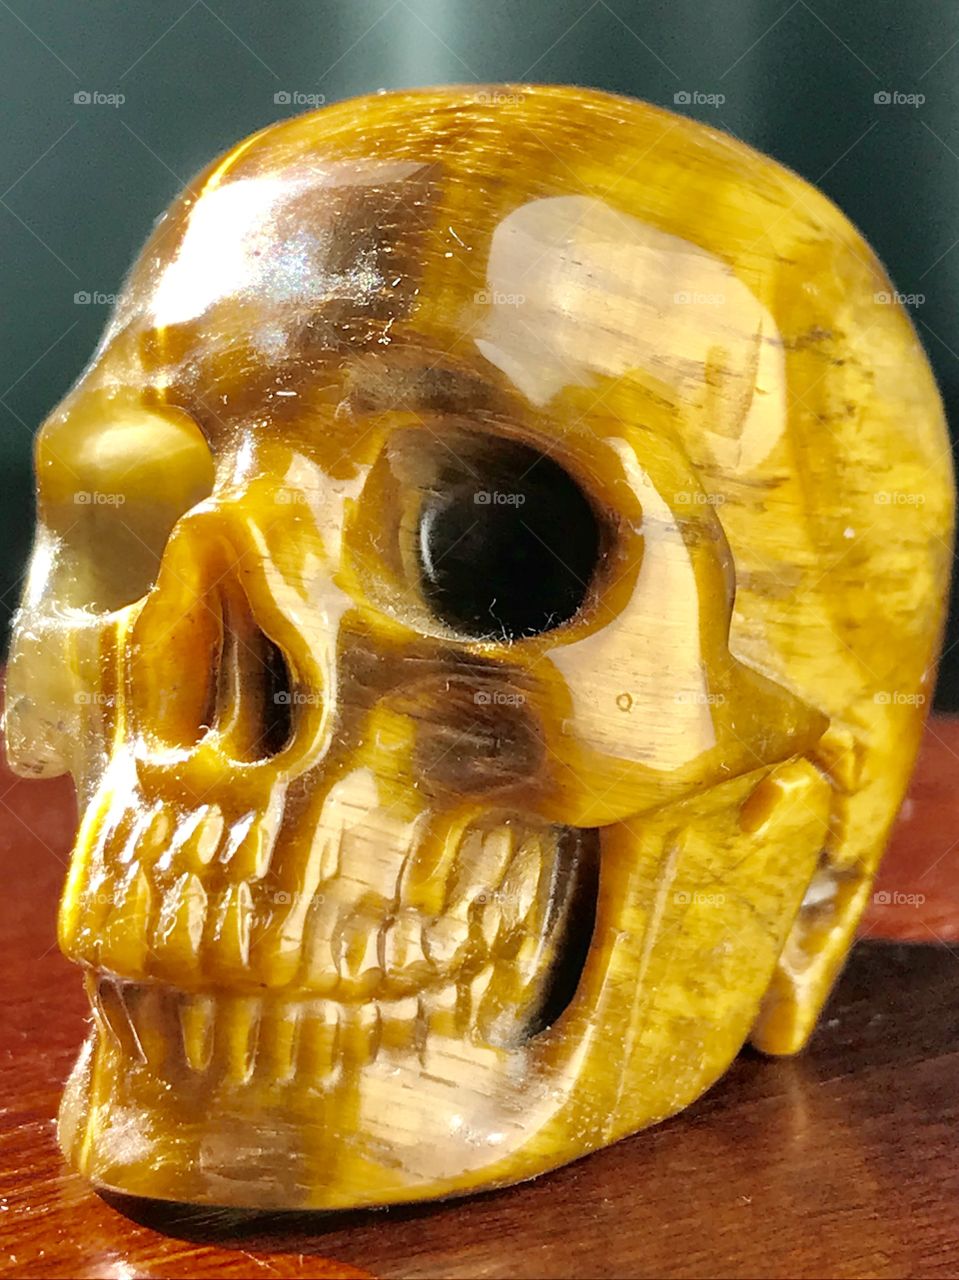 Tigers eye skull